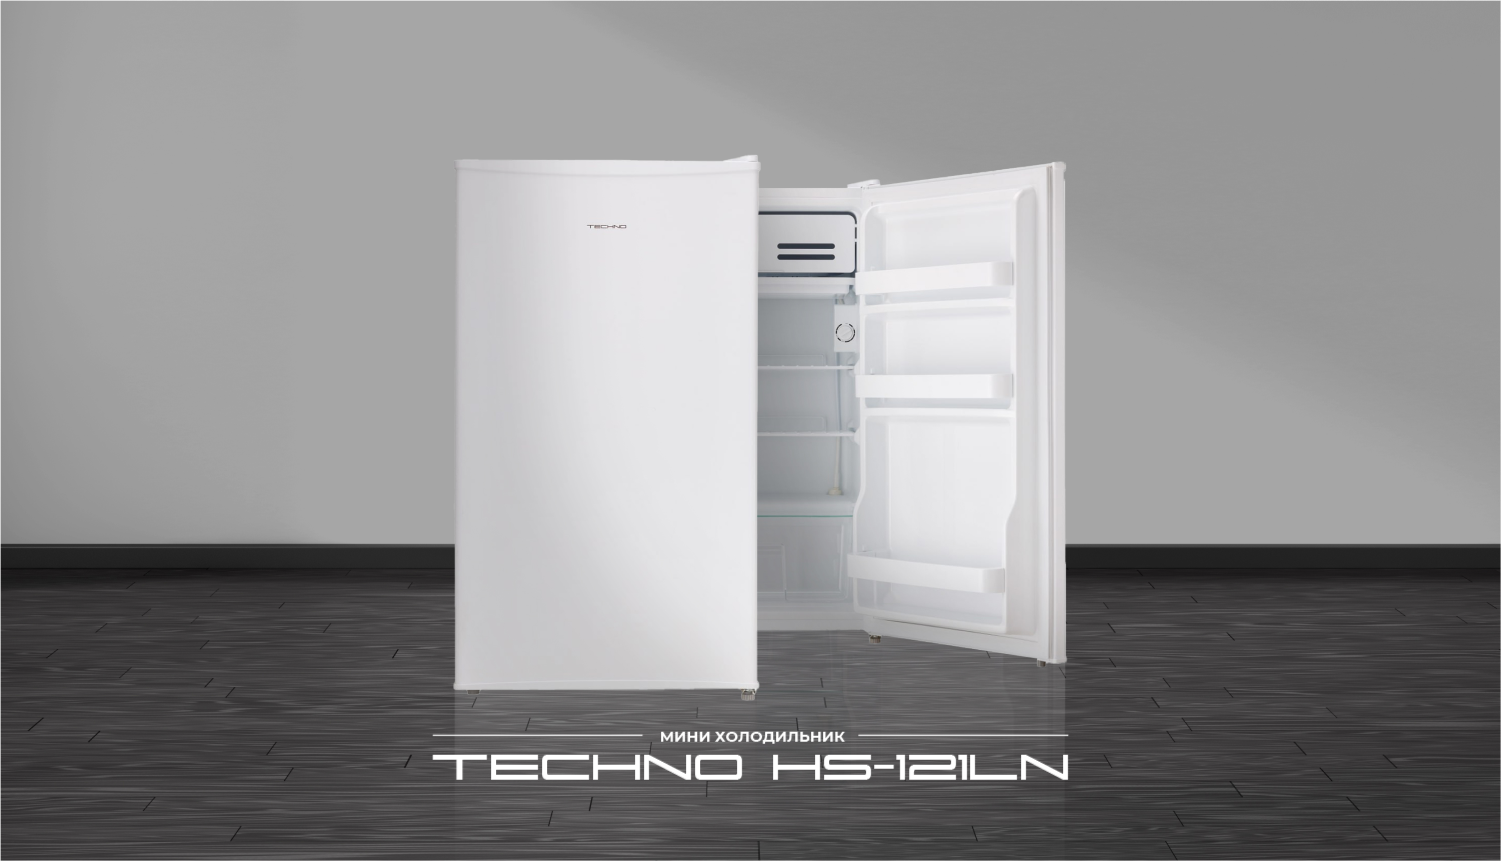 мини холодильник TABLE TOP TECHNO HS-121LN